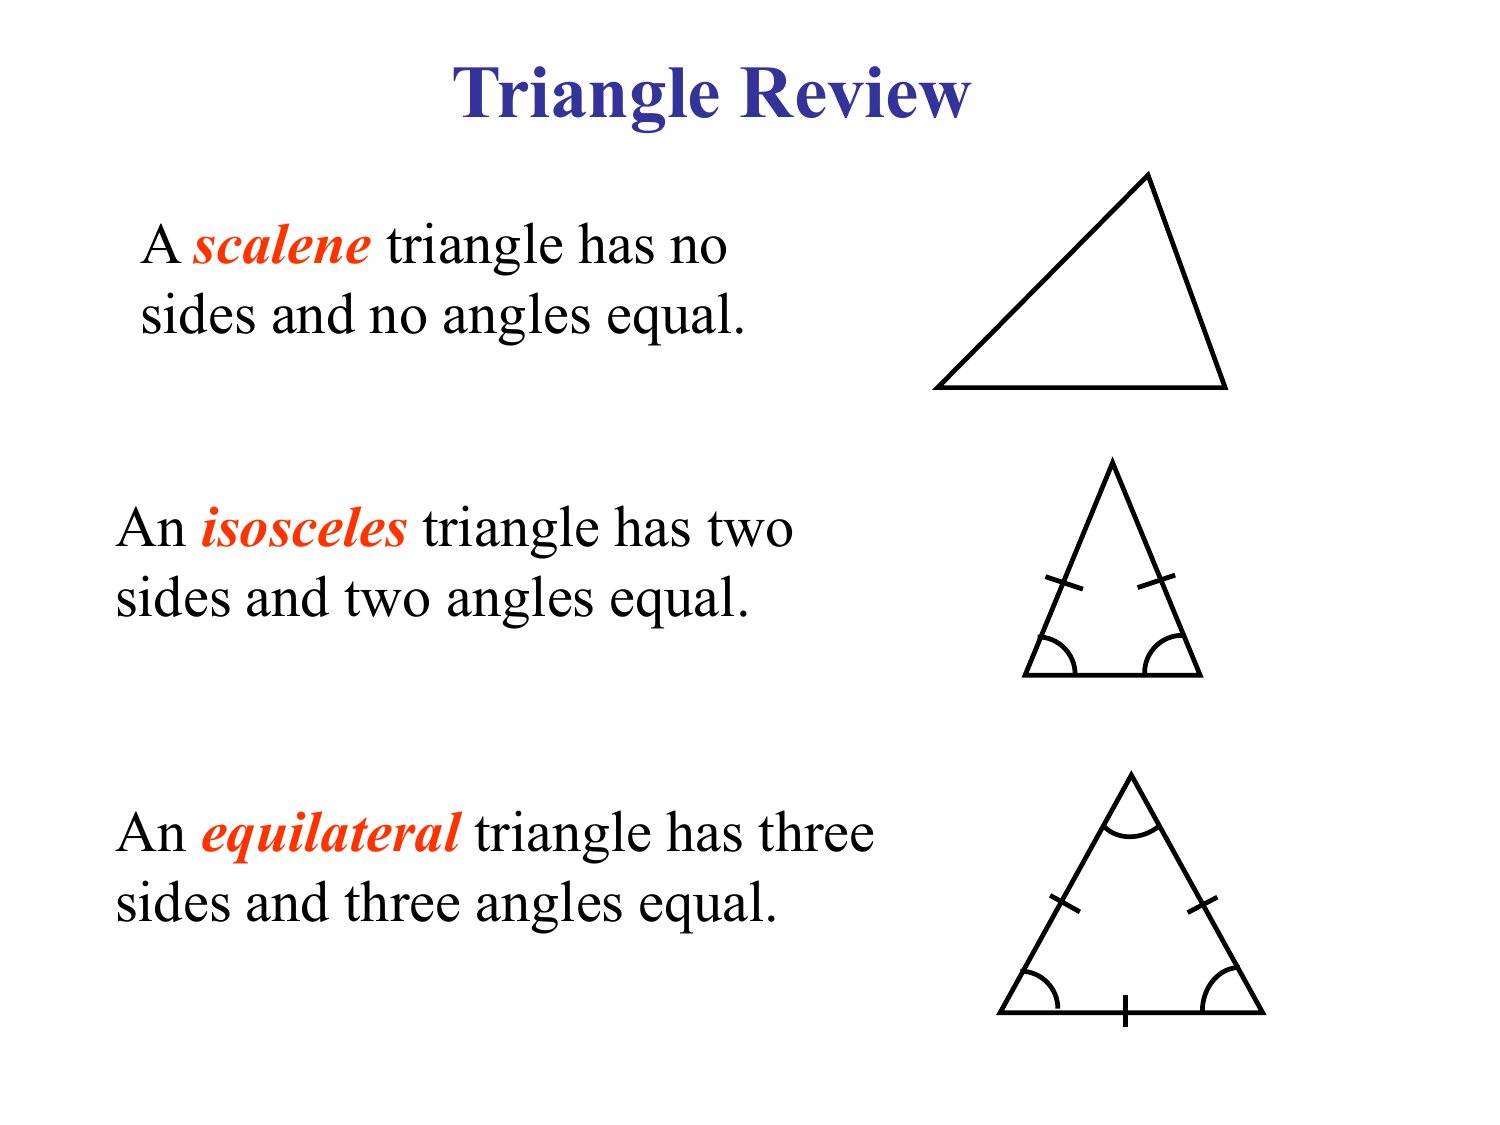 isosceles triangle angles in each corner